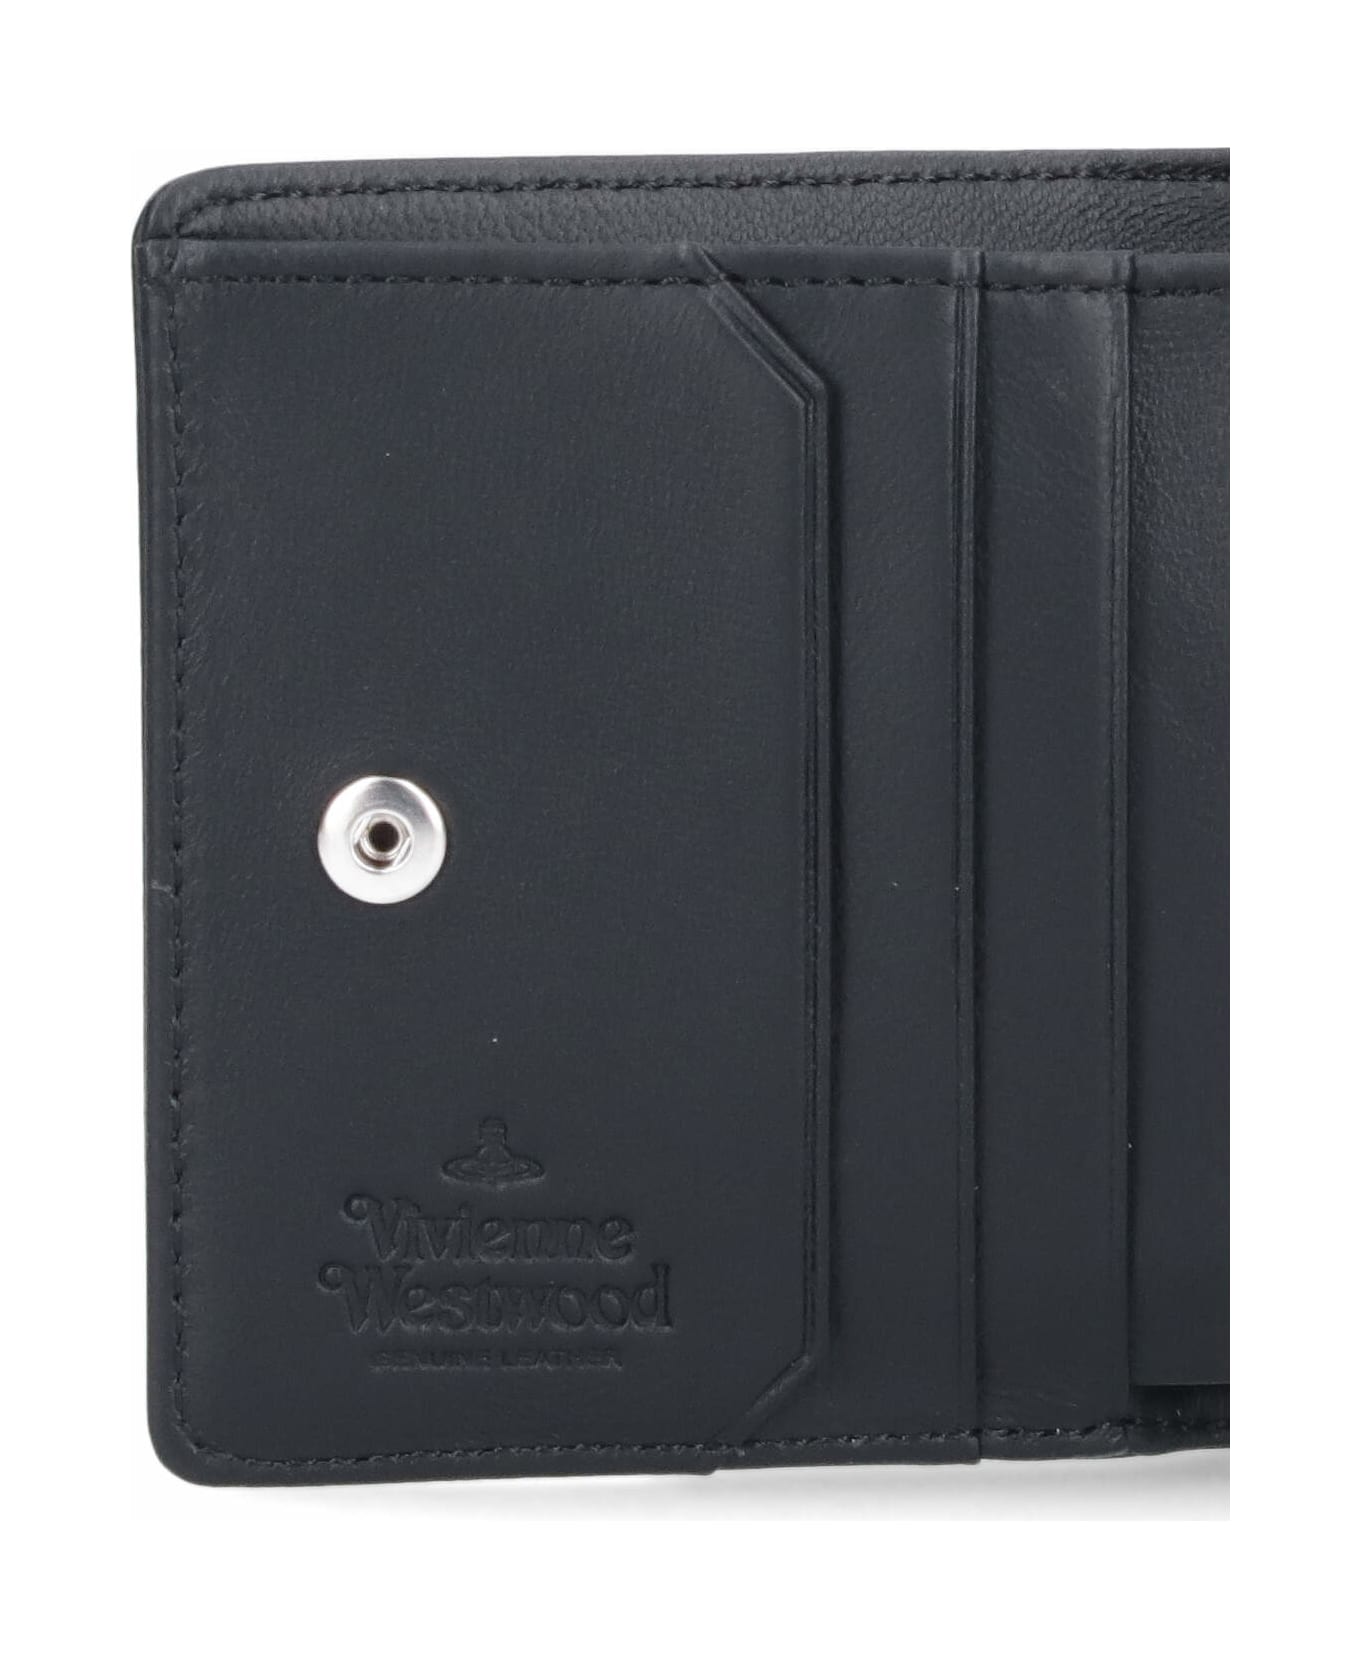 Vivienne Westwood Logo Flap Wallet - Black   財布